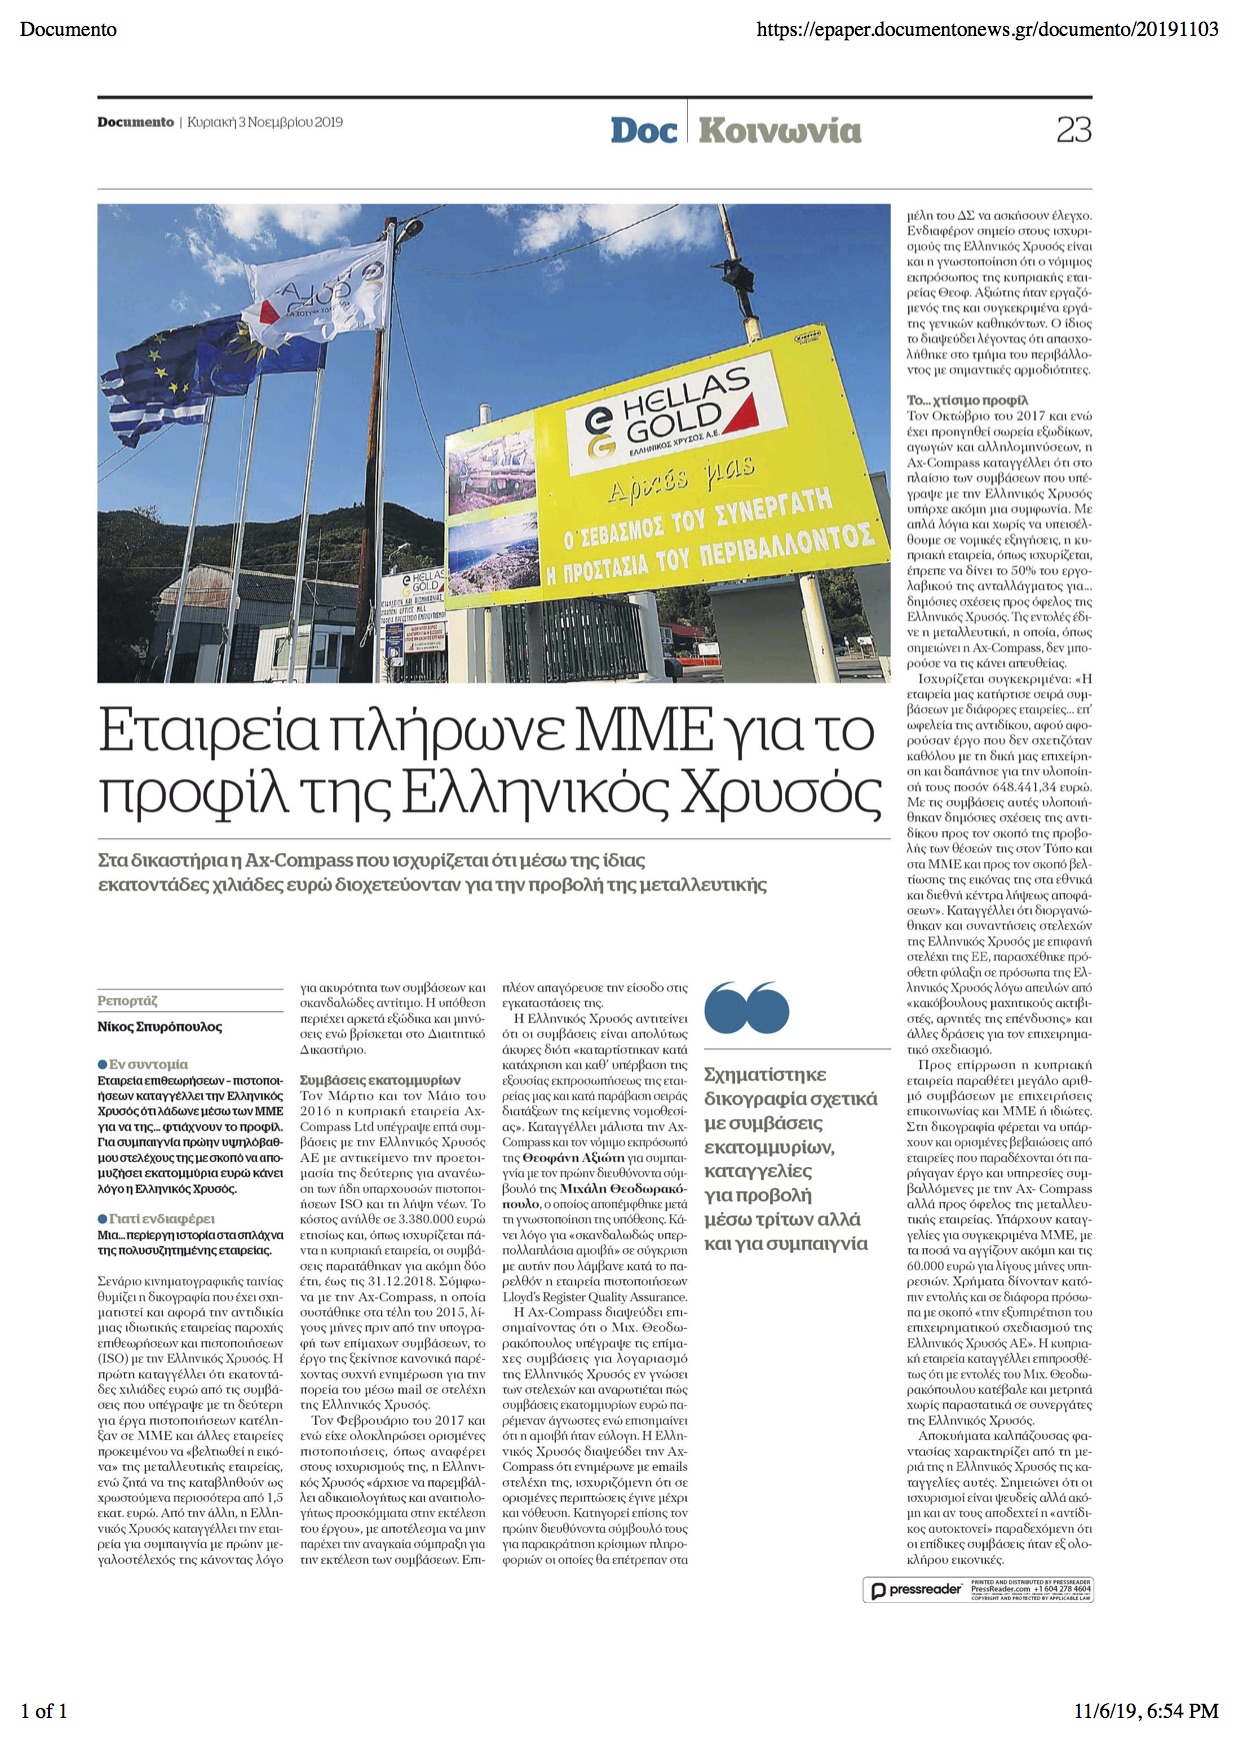 Documento: Εκατοντάδες χιλιάδες ευρώ από την Ελληνικός Χρυσός σε ΜΜΕ, μέσω Κυπριακής εταιρείας, για τη βελτίωση της εικόνας της #skouries